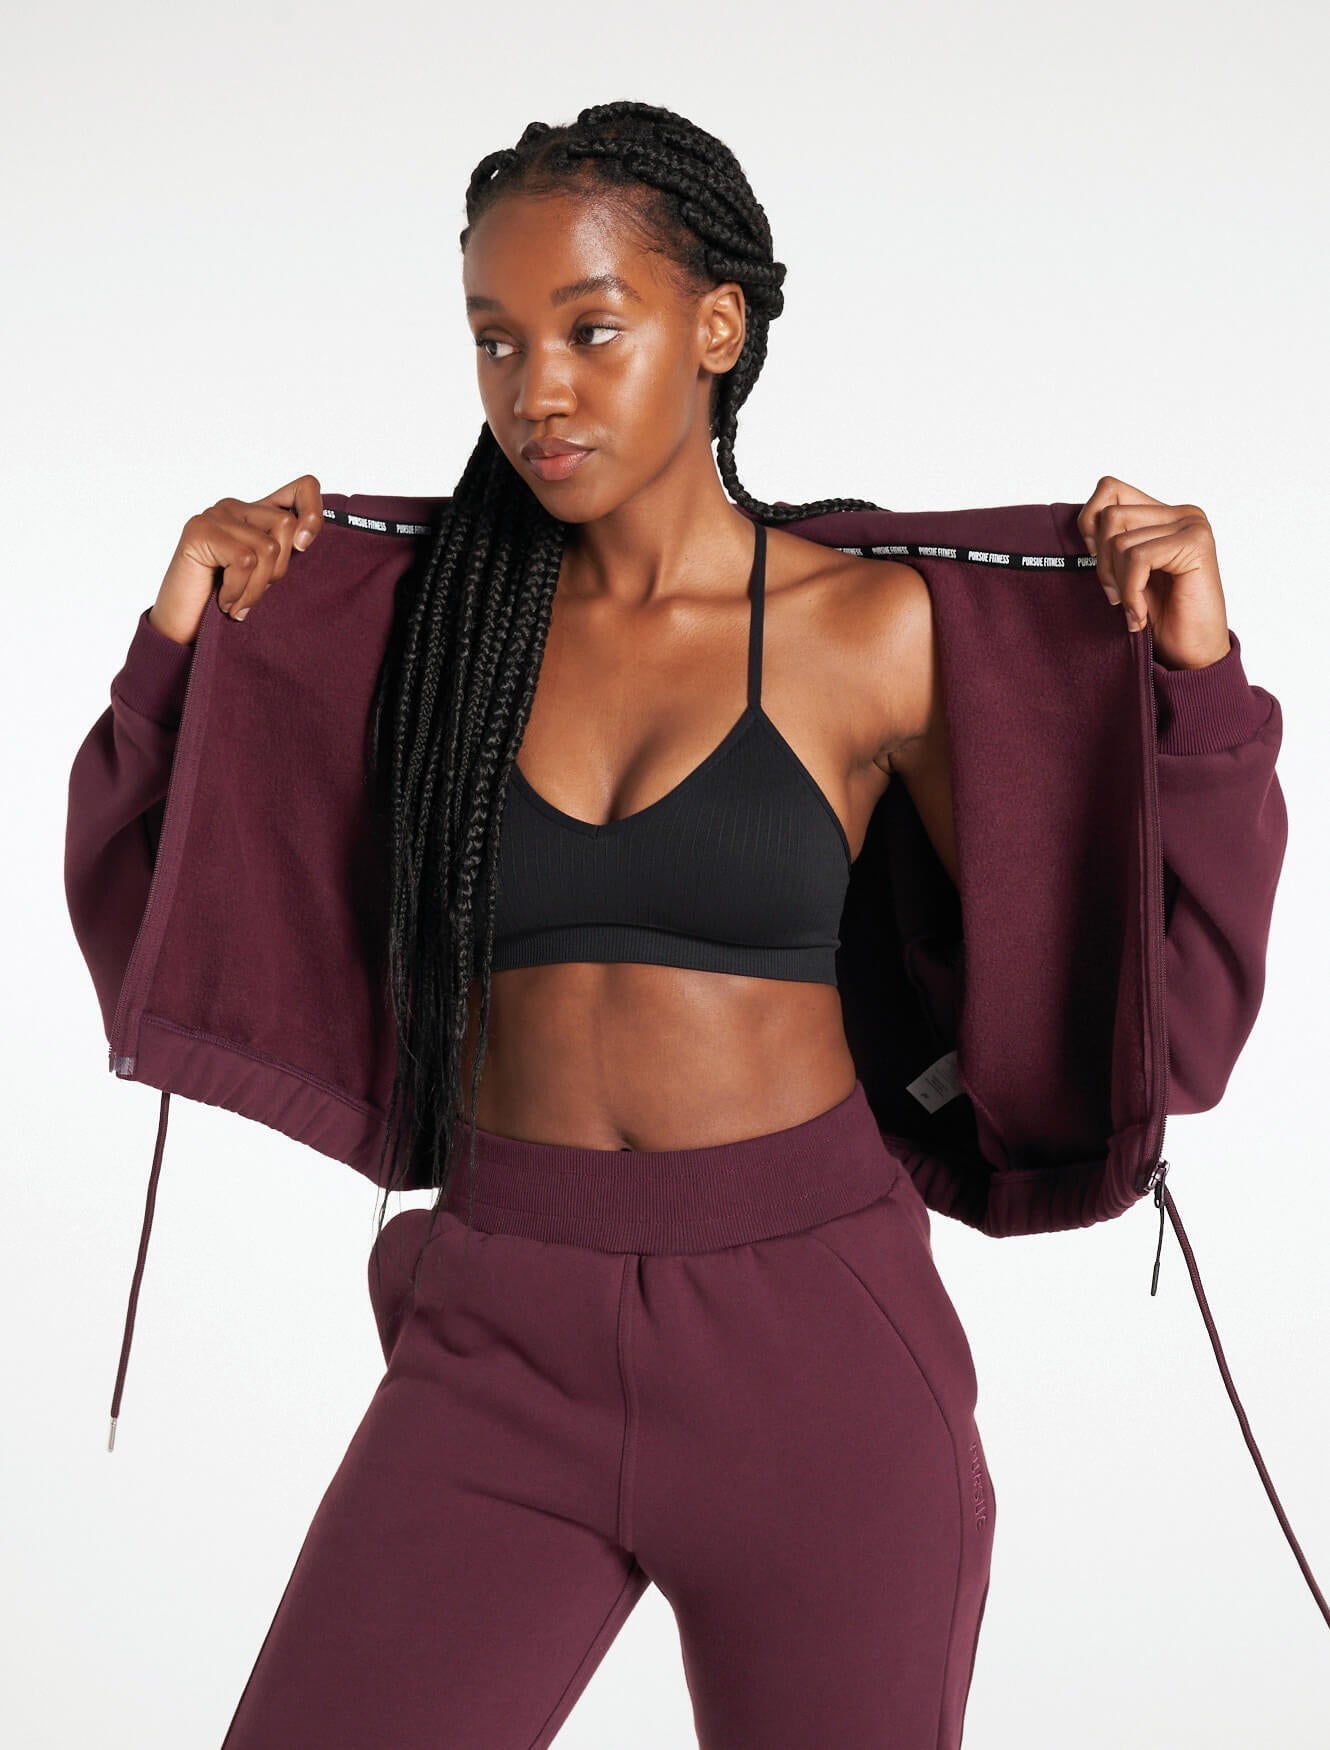 Aoouku Women's Long Sleeve Tops Cropped Jackets Zip up Gym Jacket Workout  Dry Fit Shirts Athletic Yoga Basics Light Jackets Black M 